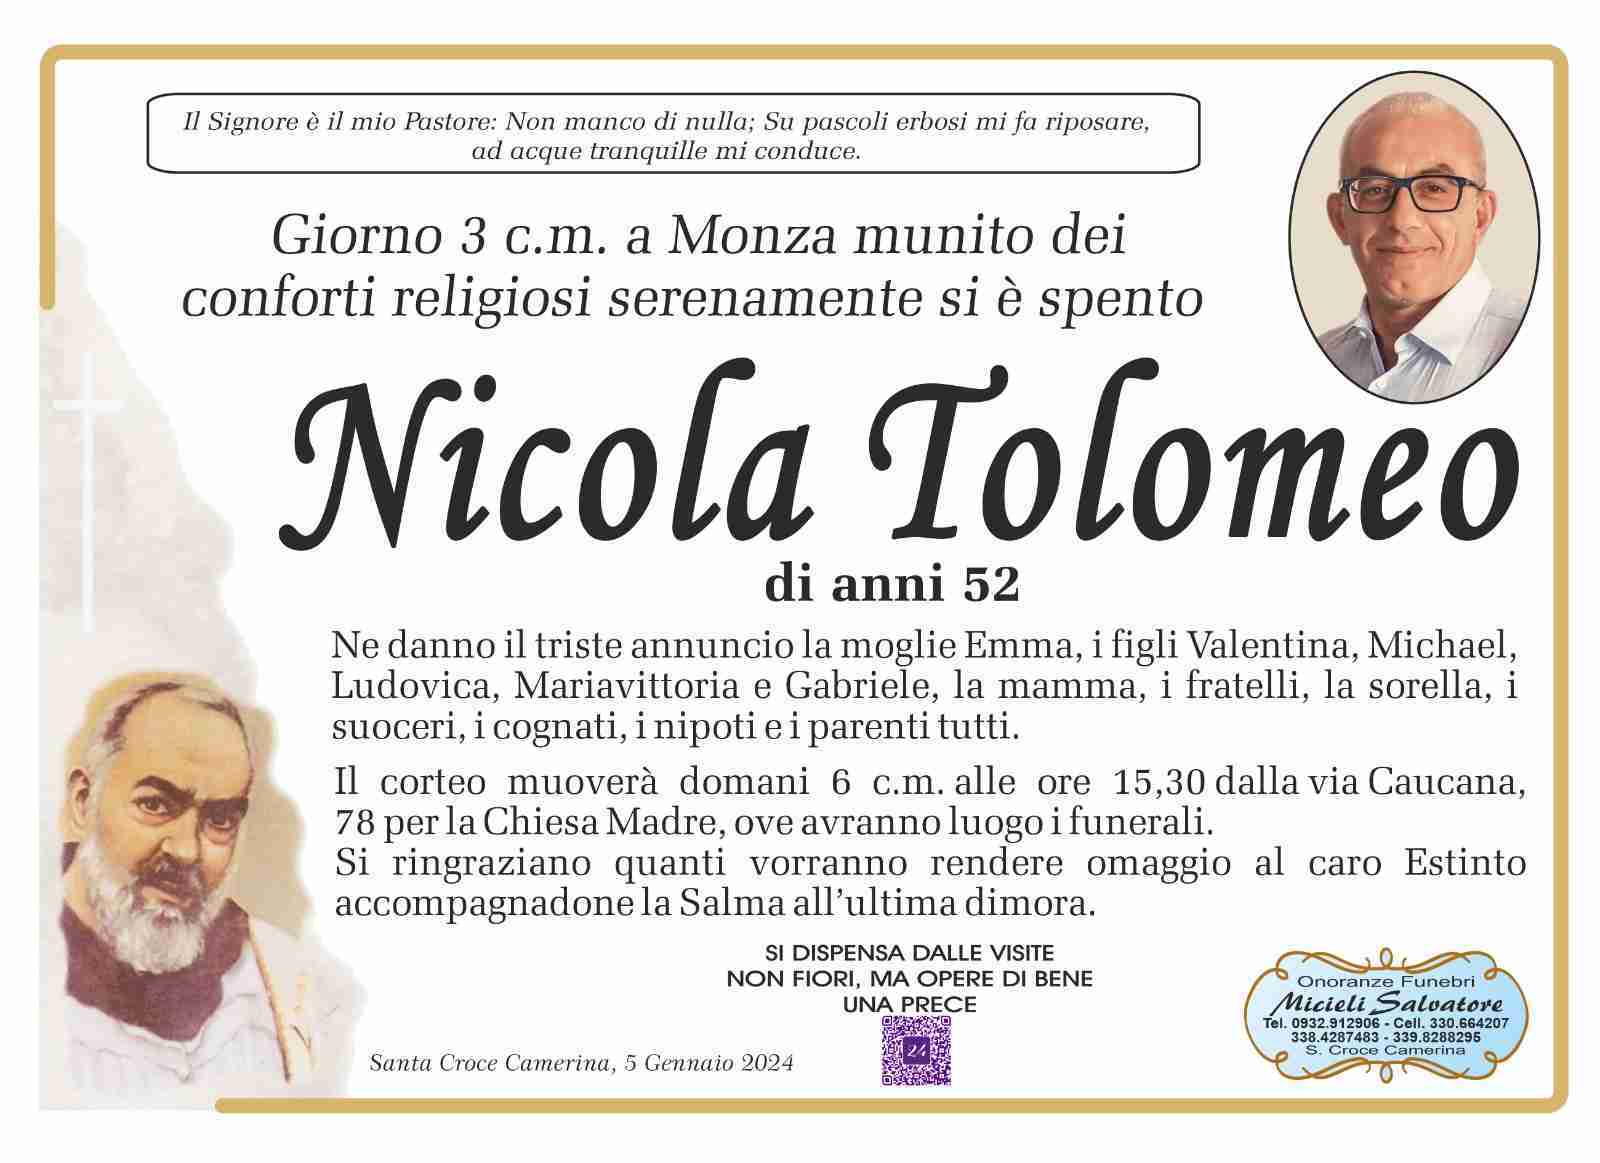 Nicola Tolomeo